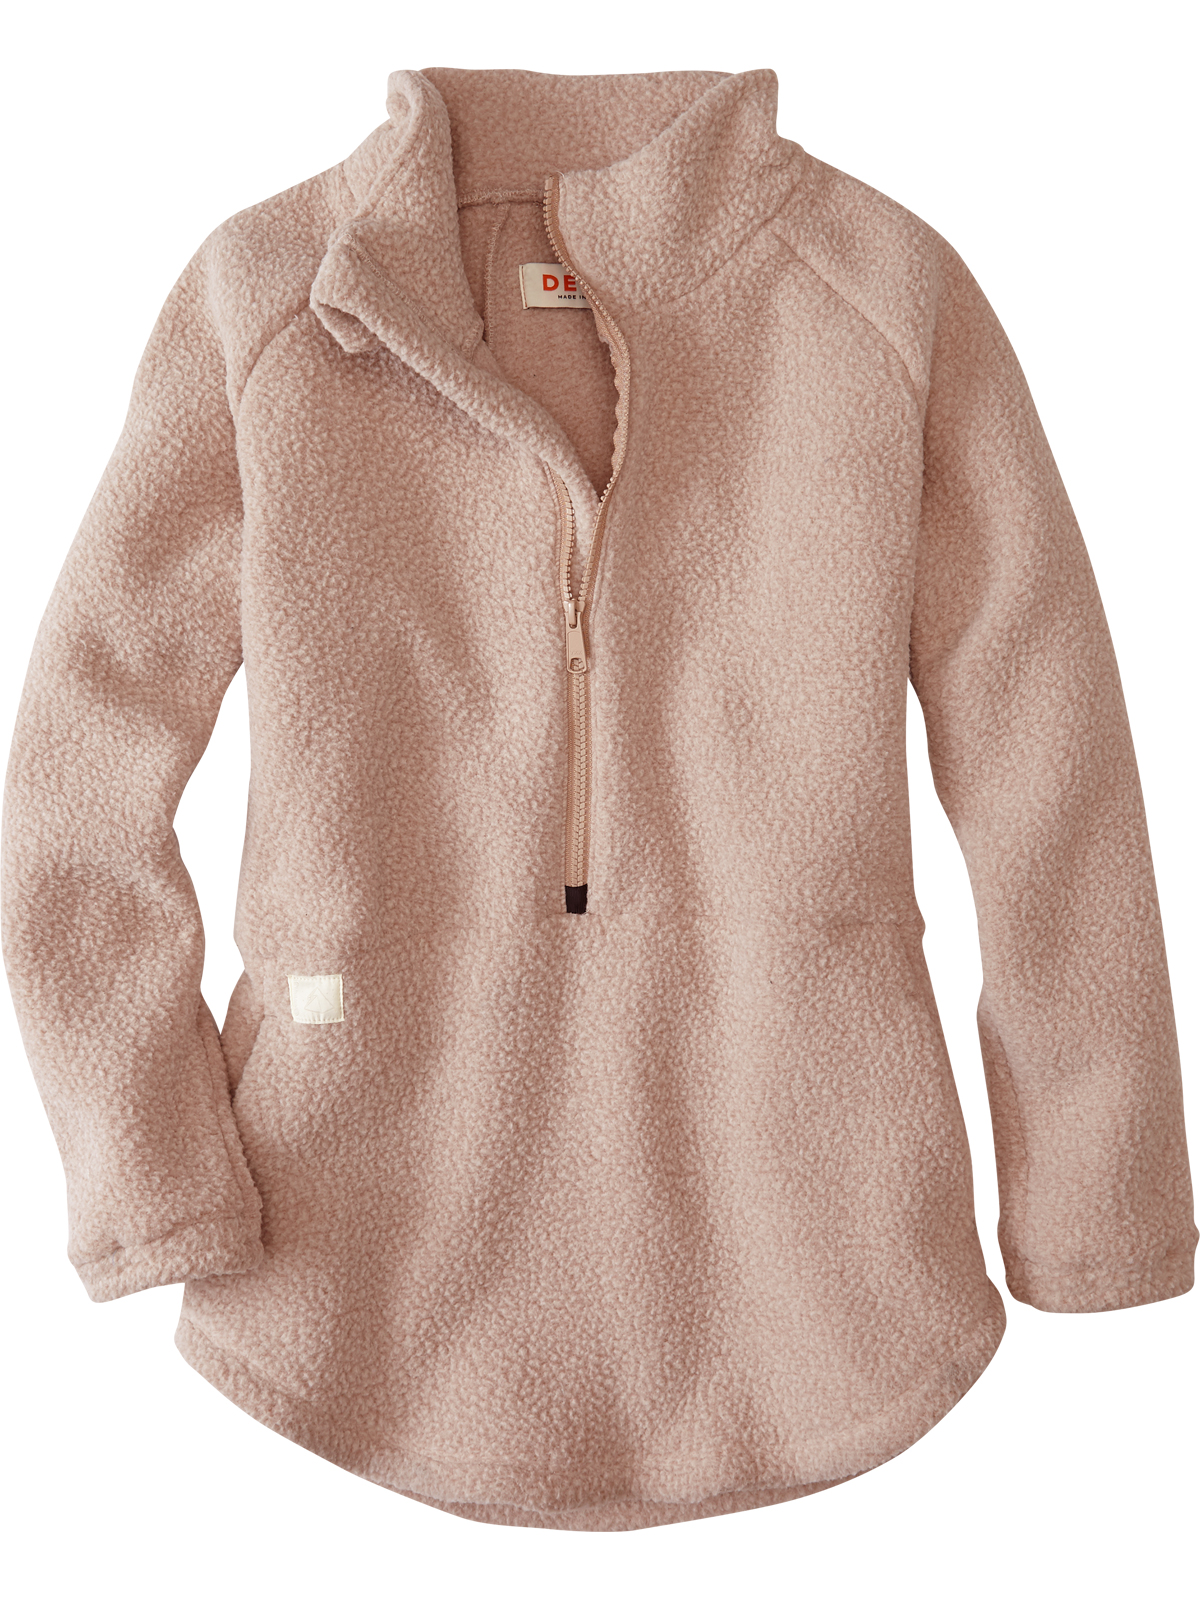 Women's Fleece Pullover Small Batch